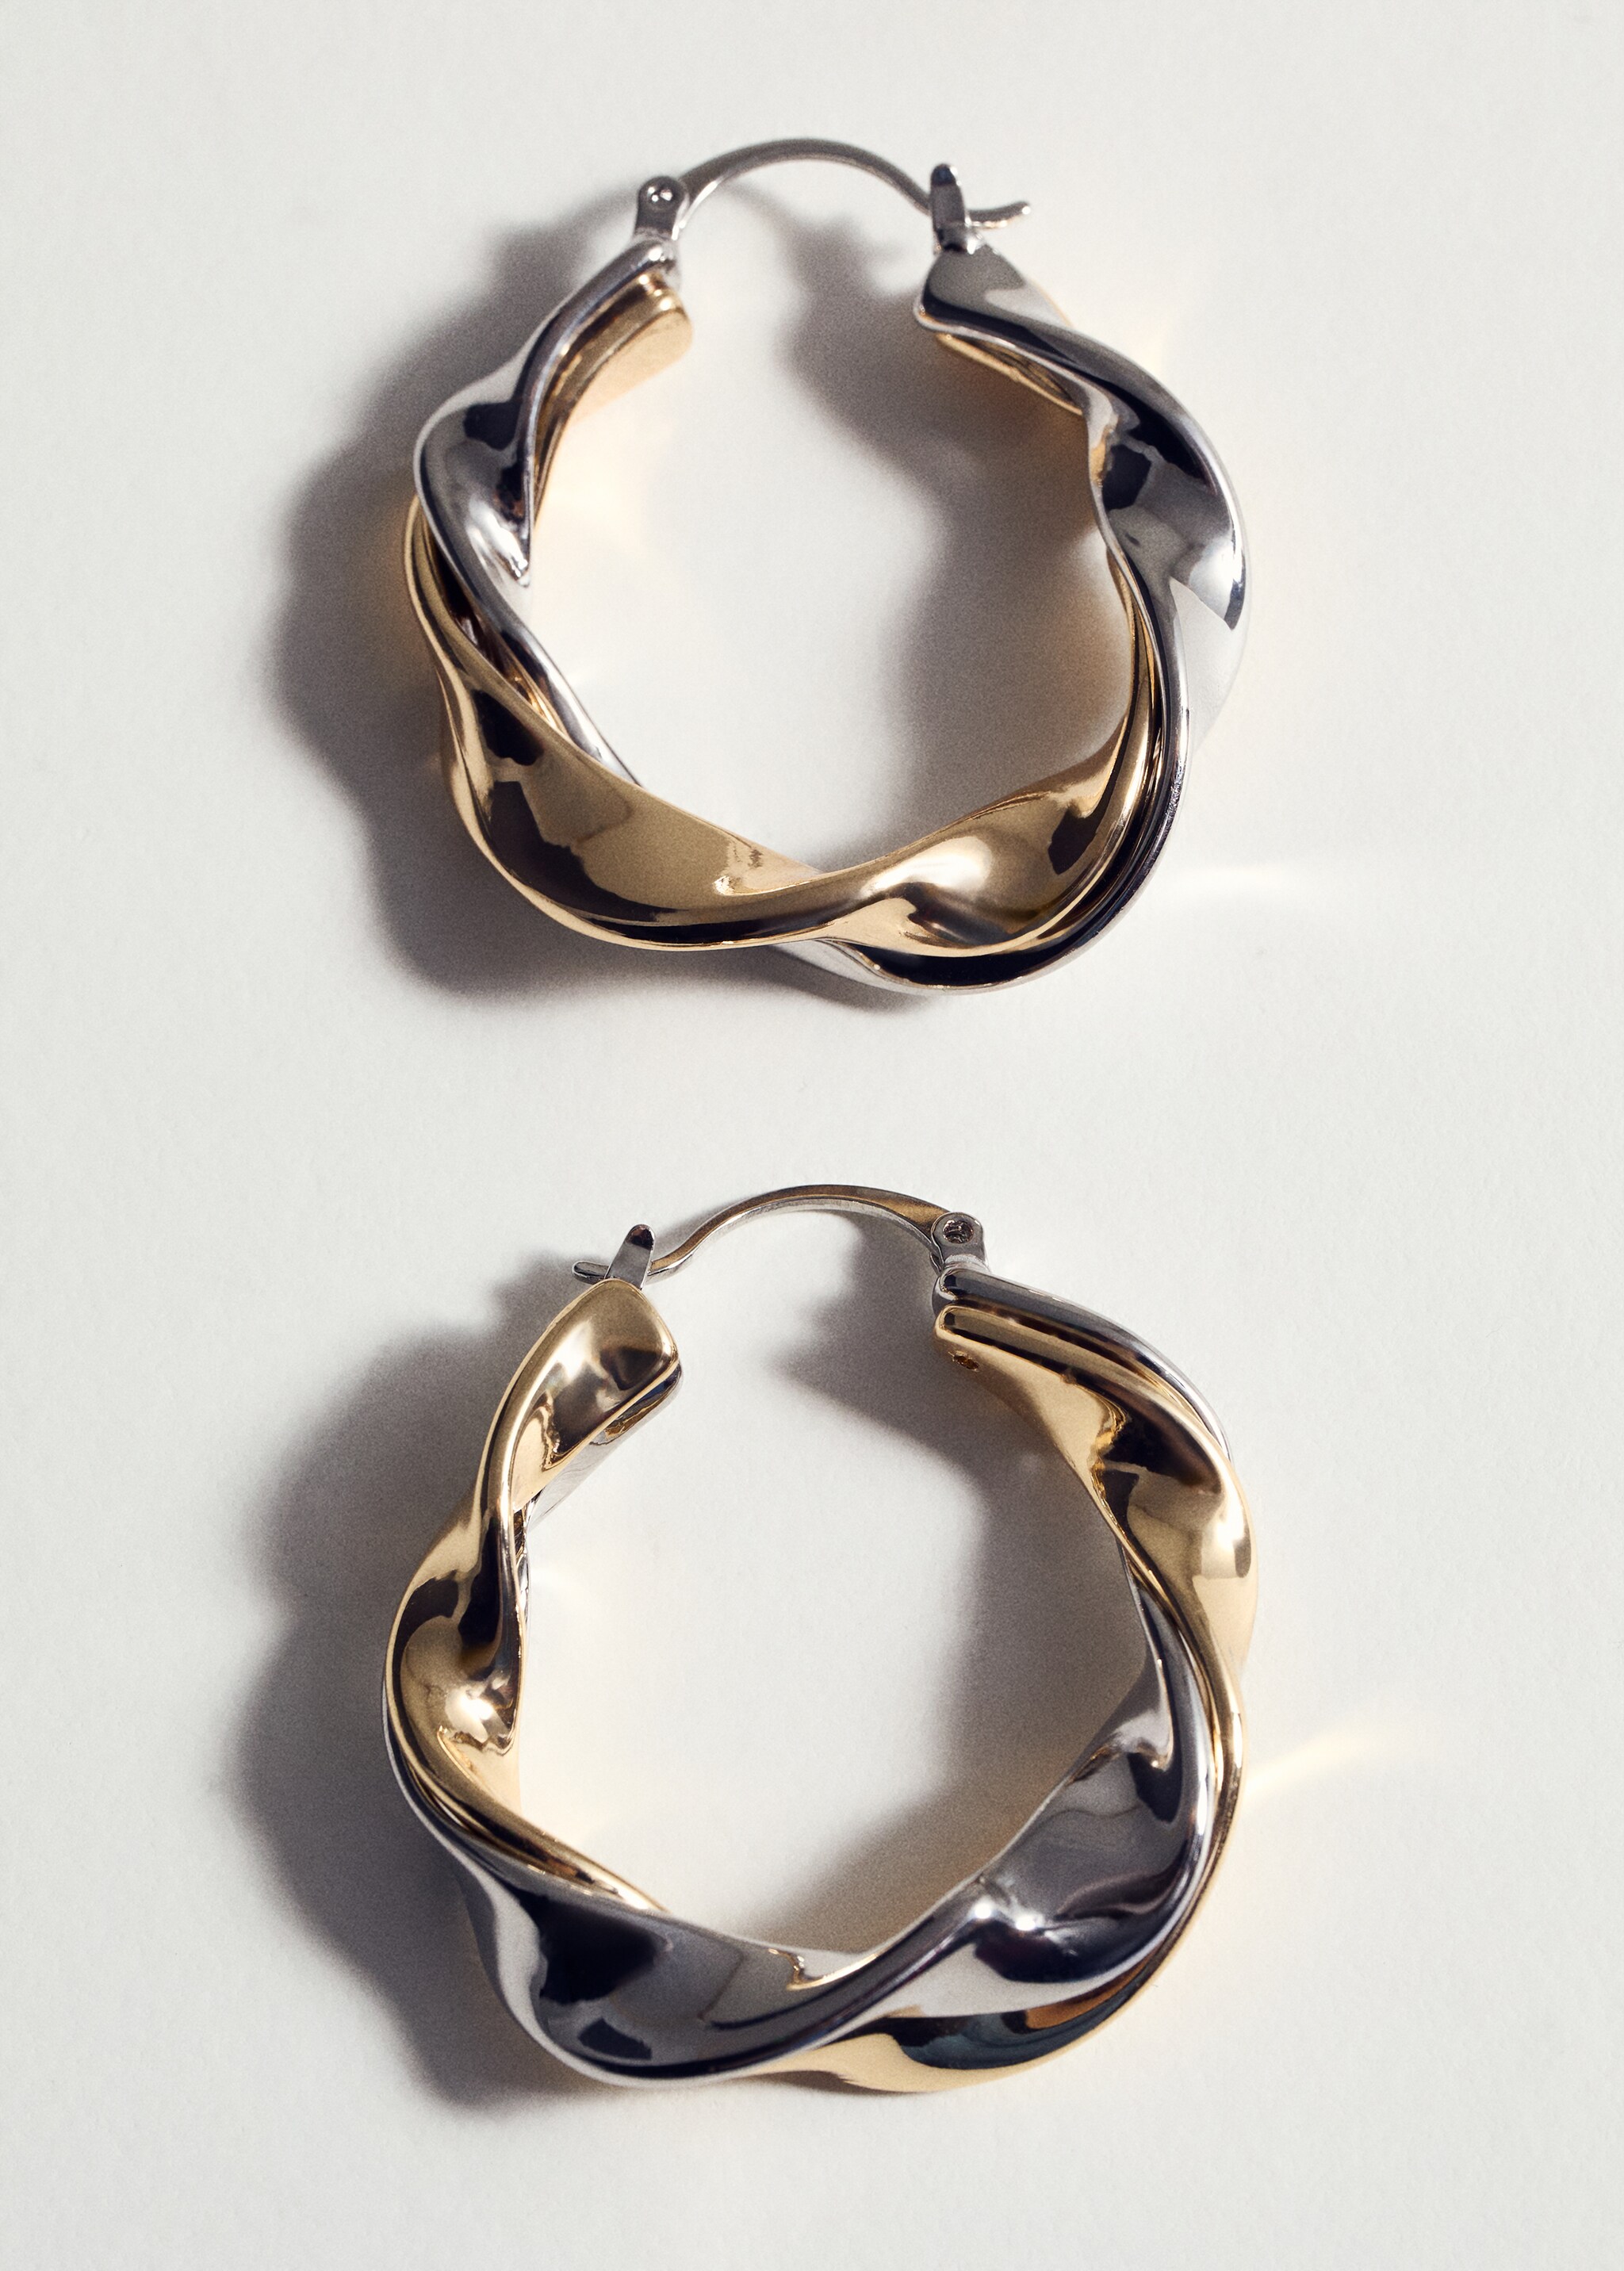 Twisted hoop earrings - Details of the article 5